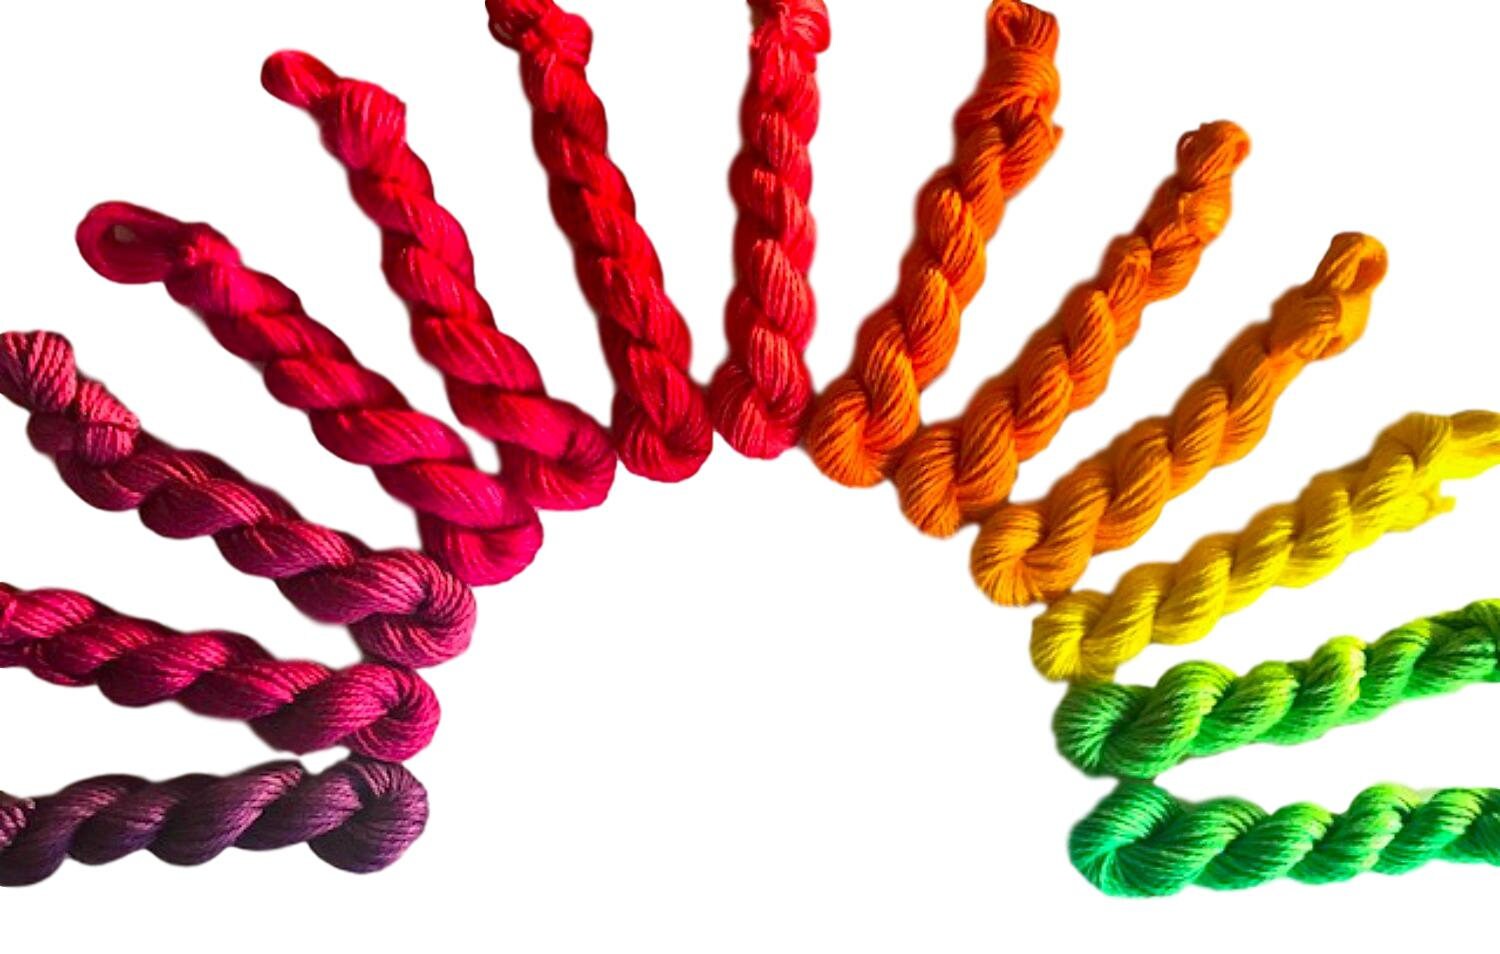 Vegan Yarn Kit - "Elise" - Hand Dyed Fiber - 13 Rainbow Colors - Bamboo Cotton - DK Light Worsted - Gradient Ultra Minis - 25 Yds Each